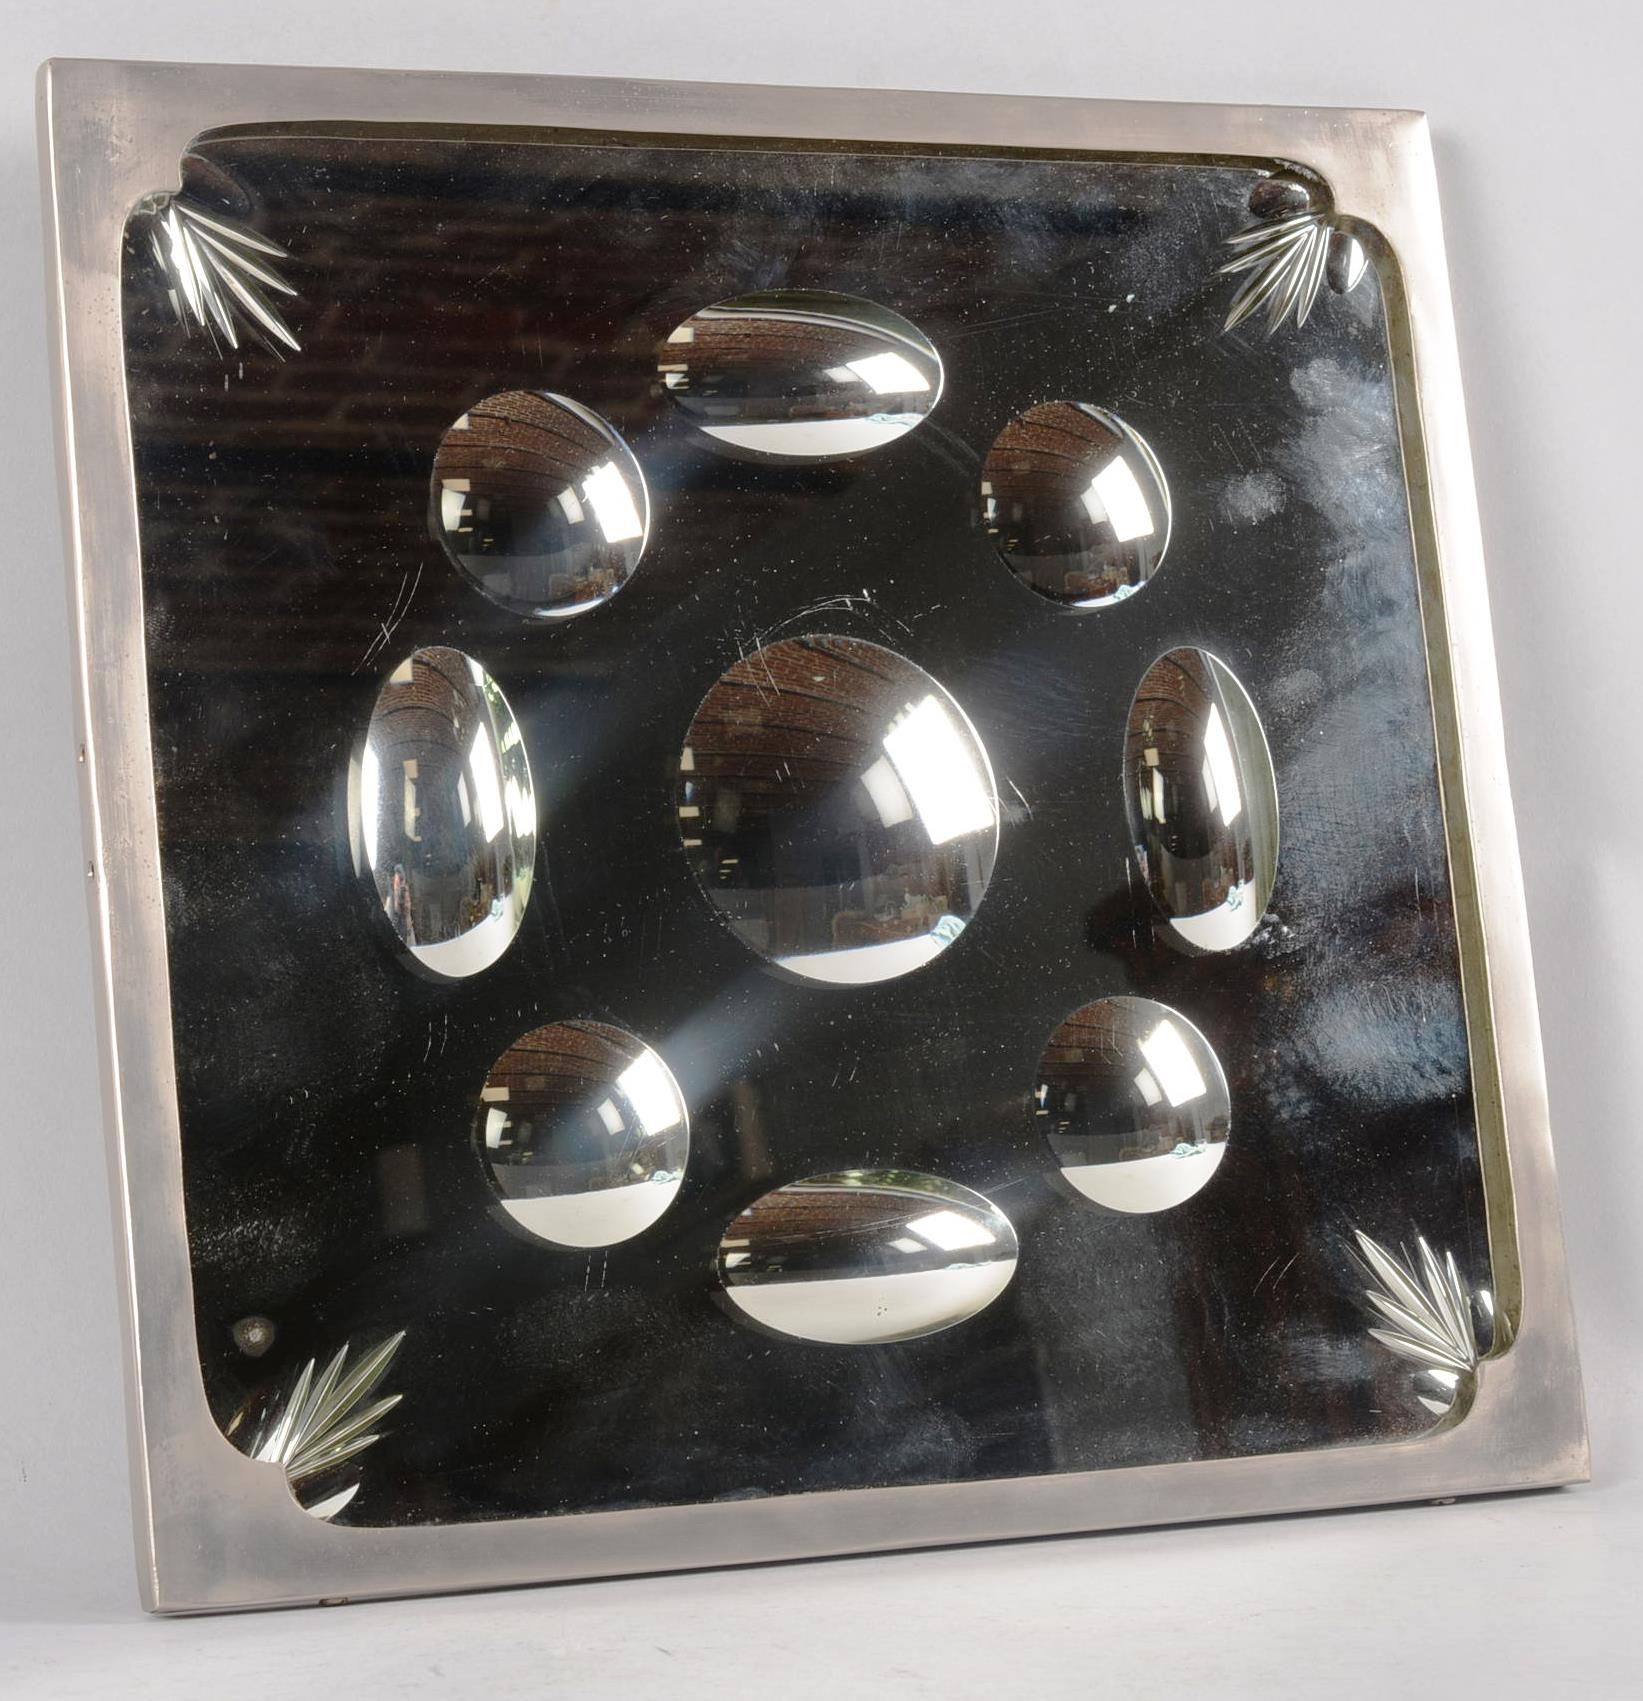 Miroir de sorcière 有镀银金属框架的女巫镜。

20世纪20年代的作品。

尺寸：34,5 cm x 33 cm